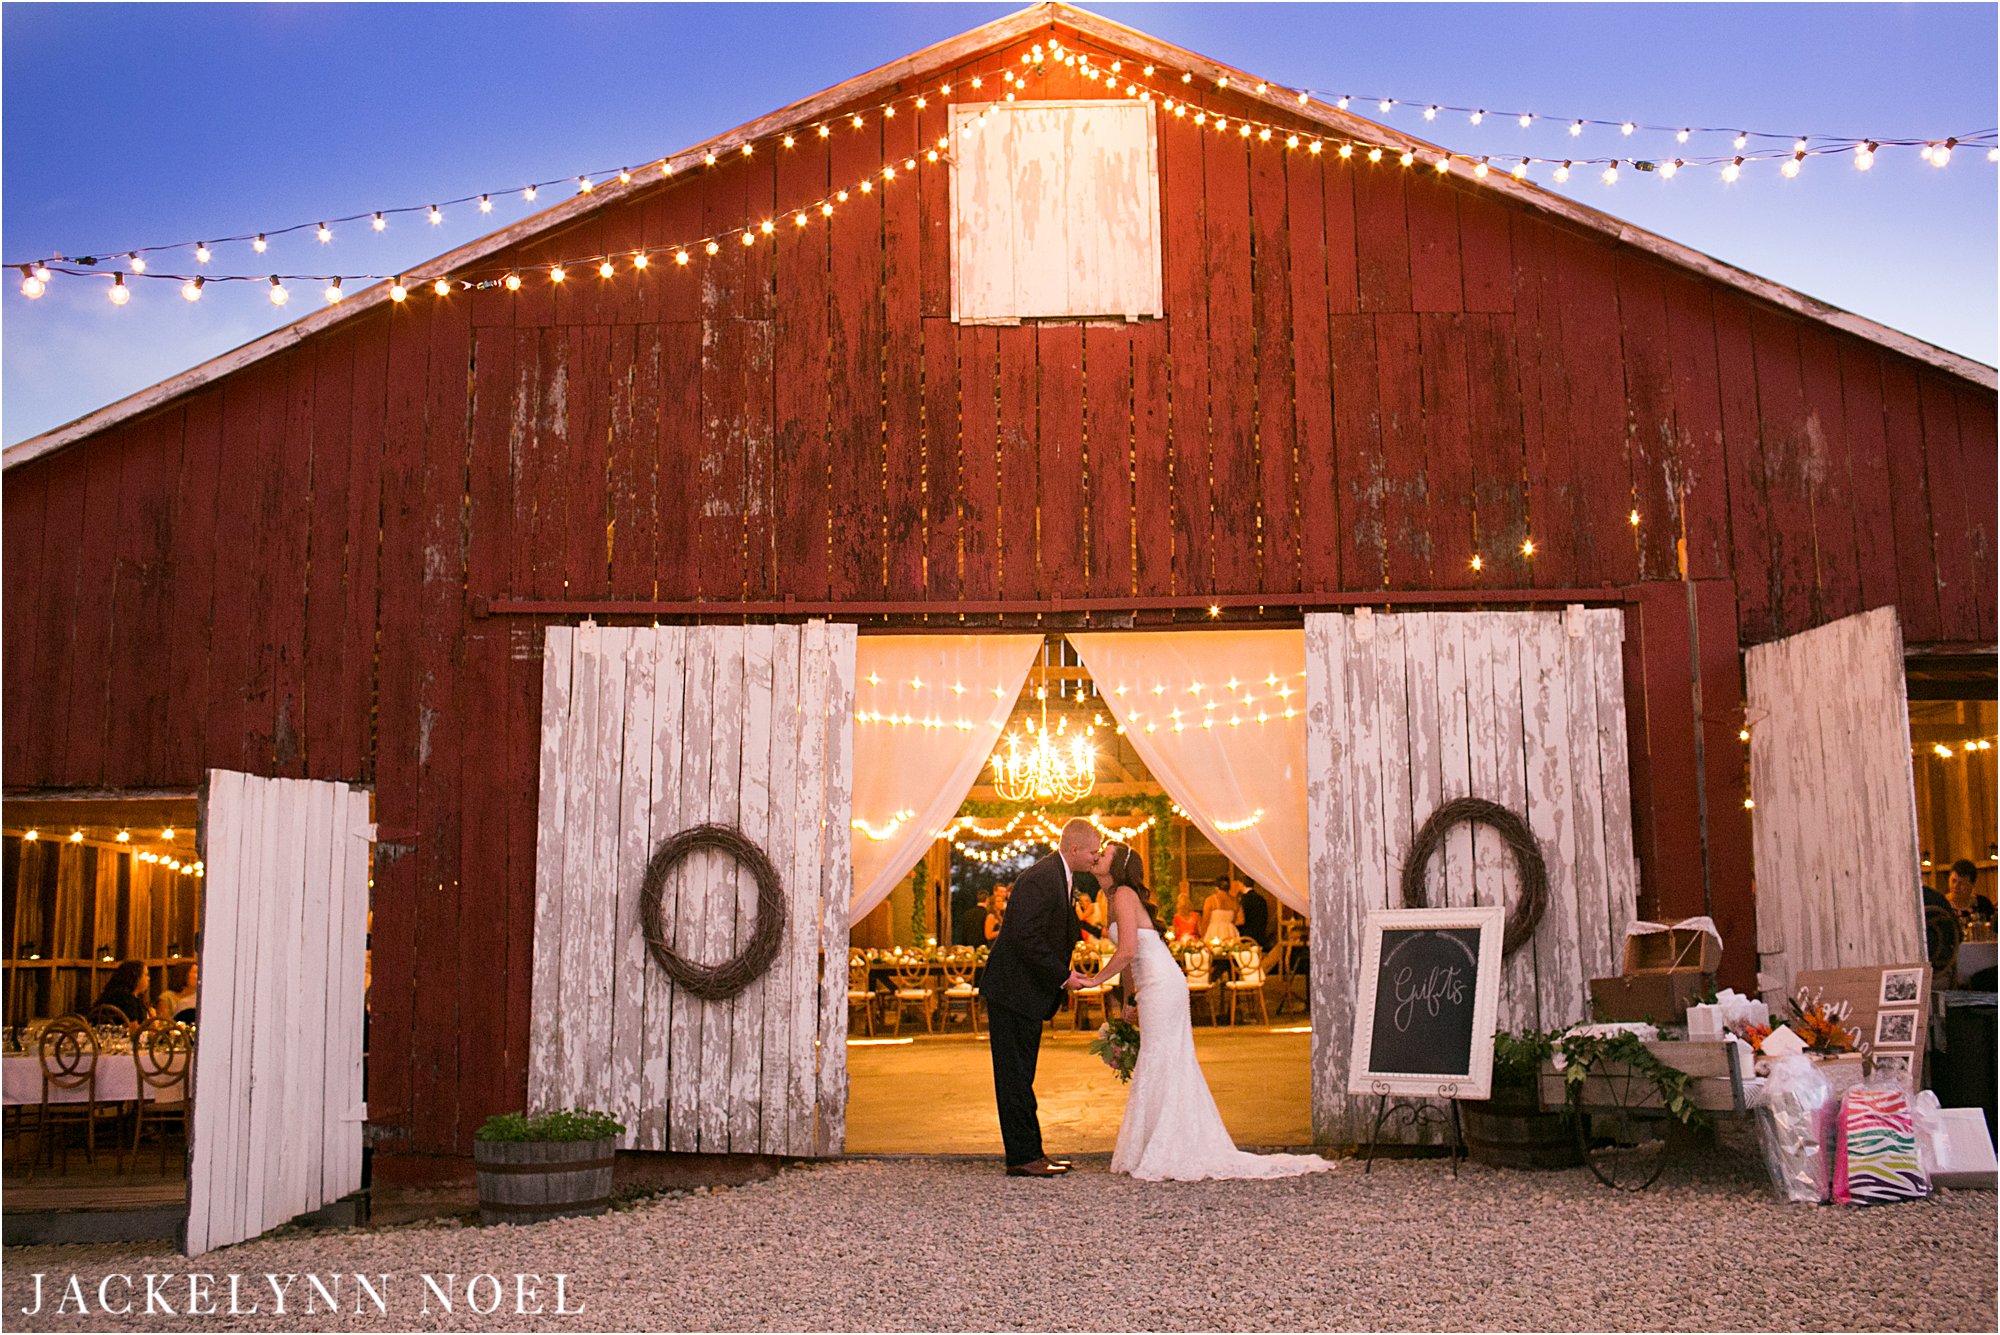 St. Louis Wedding Photography, Jackelynn Noel Photography, Dodson Orchards Barn Wedding